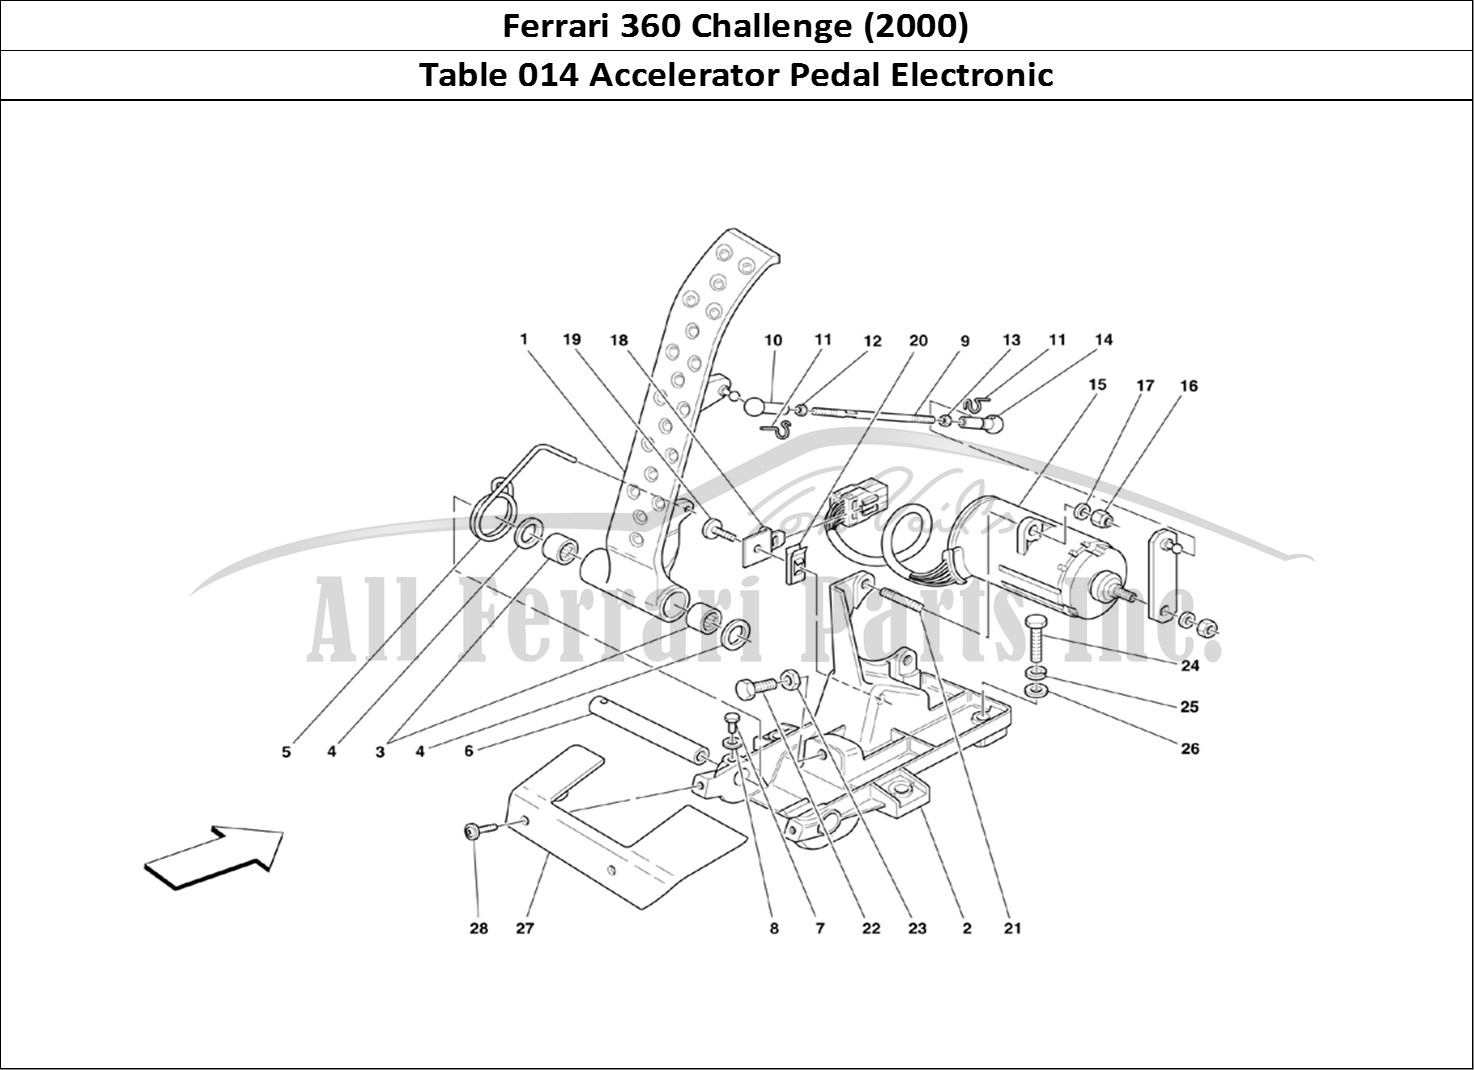 Ferrari Parts Ferrari 360 Challenge (2000) Page 014 Electronic Accelerator Pe